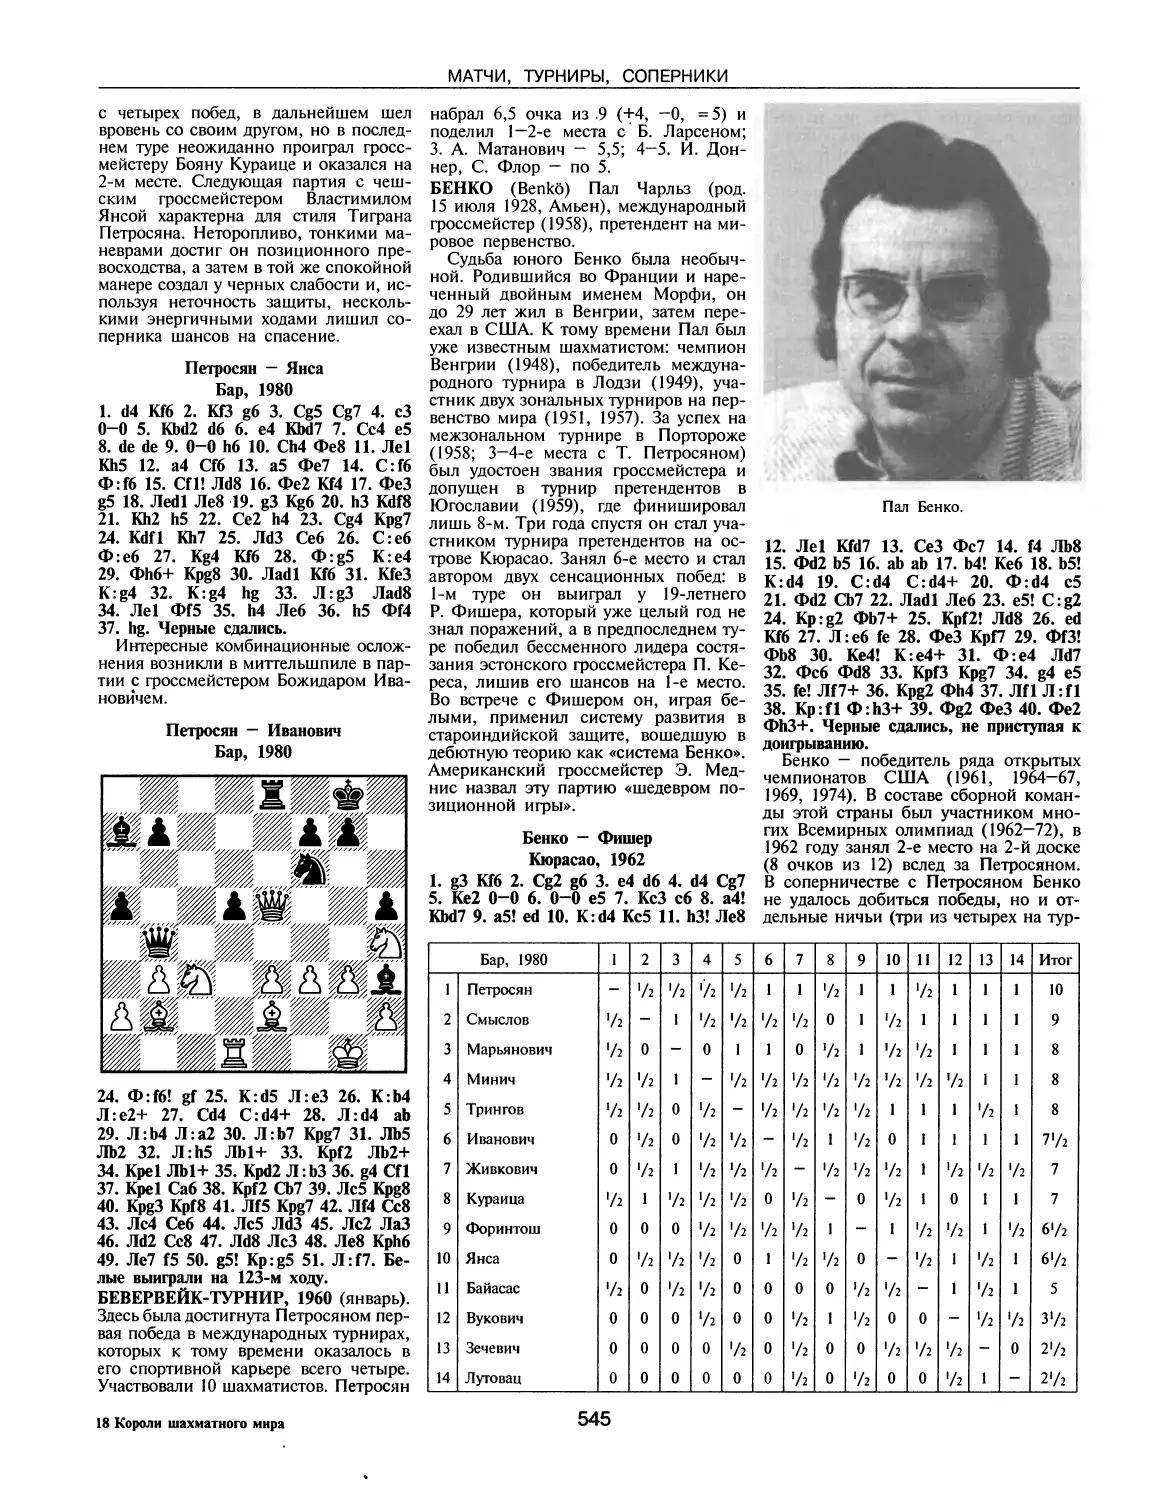 Бевервейк-турнир, 1960
Бенко П.